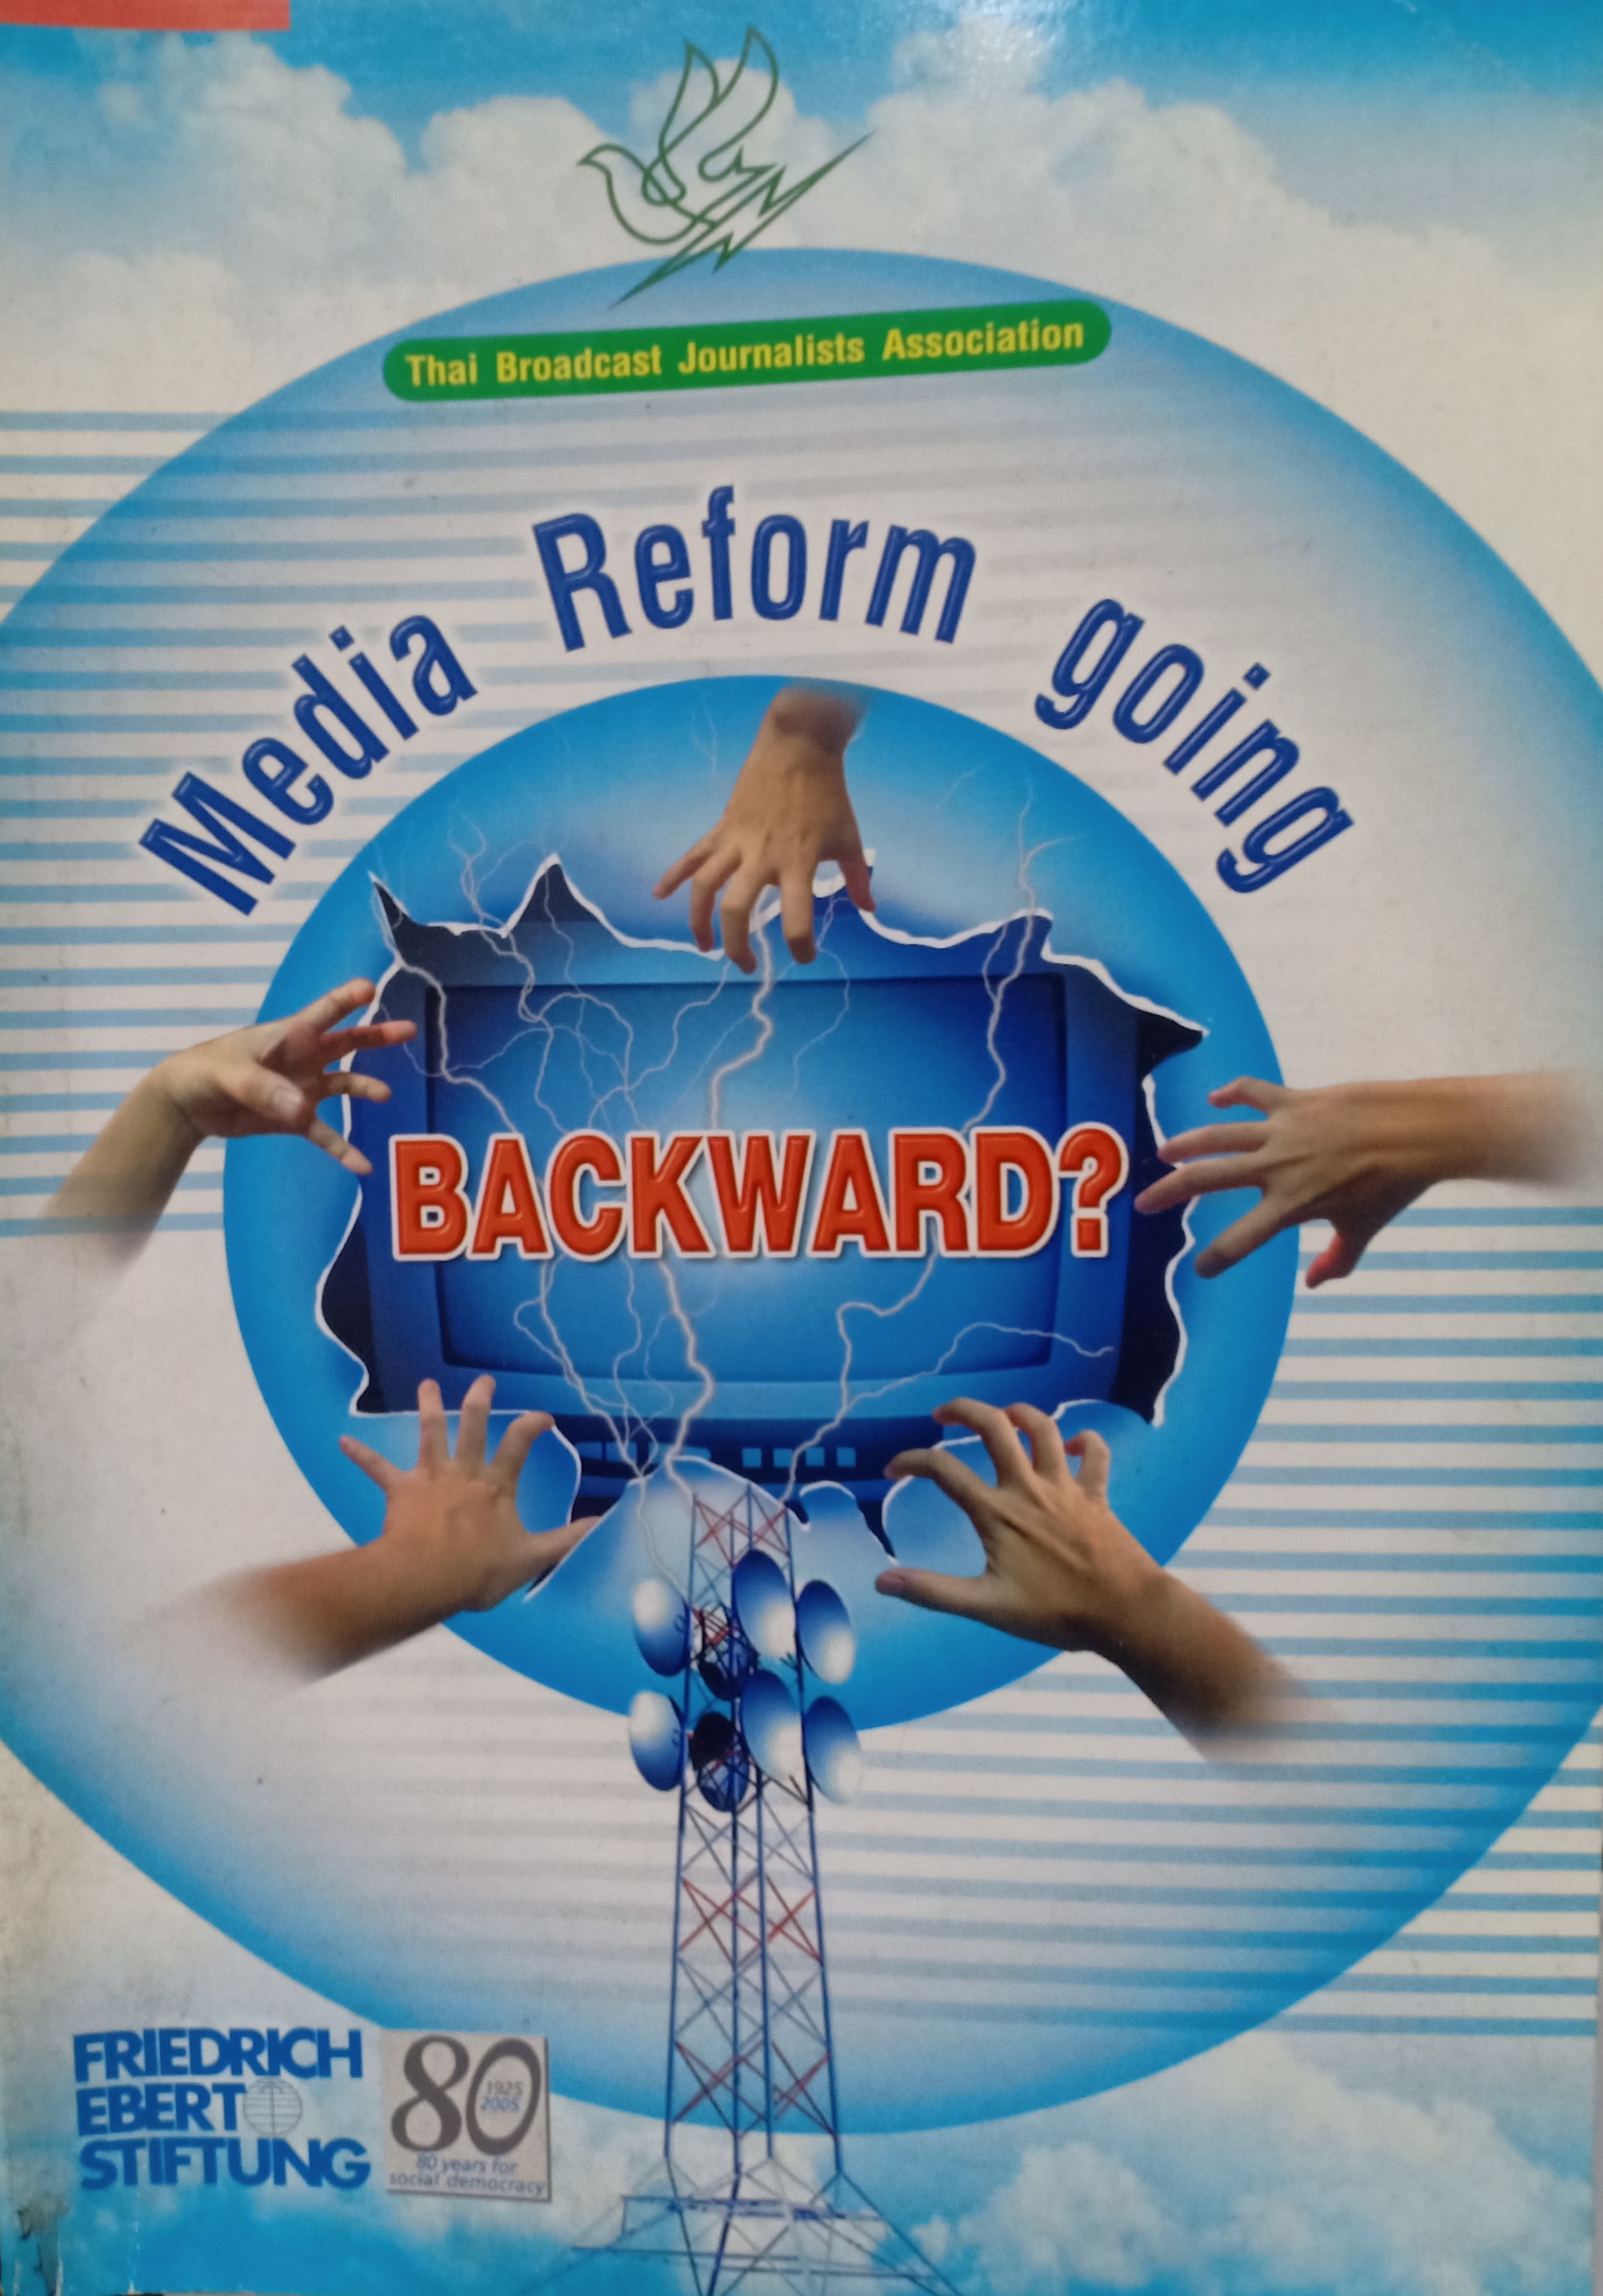 Media reform going backward?